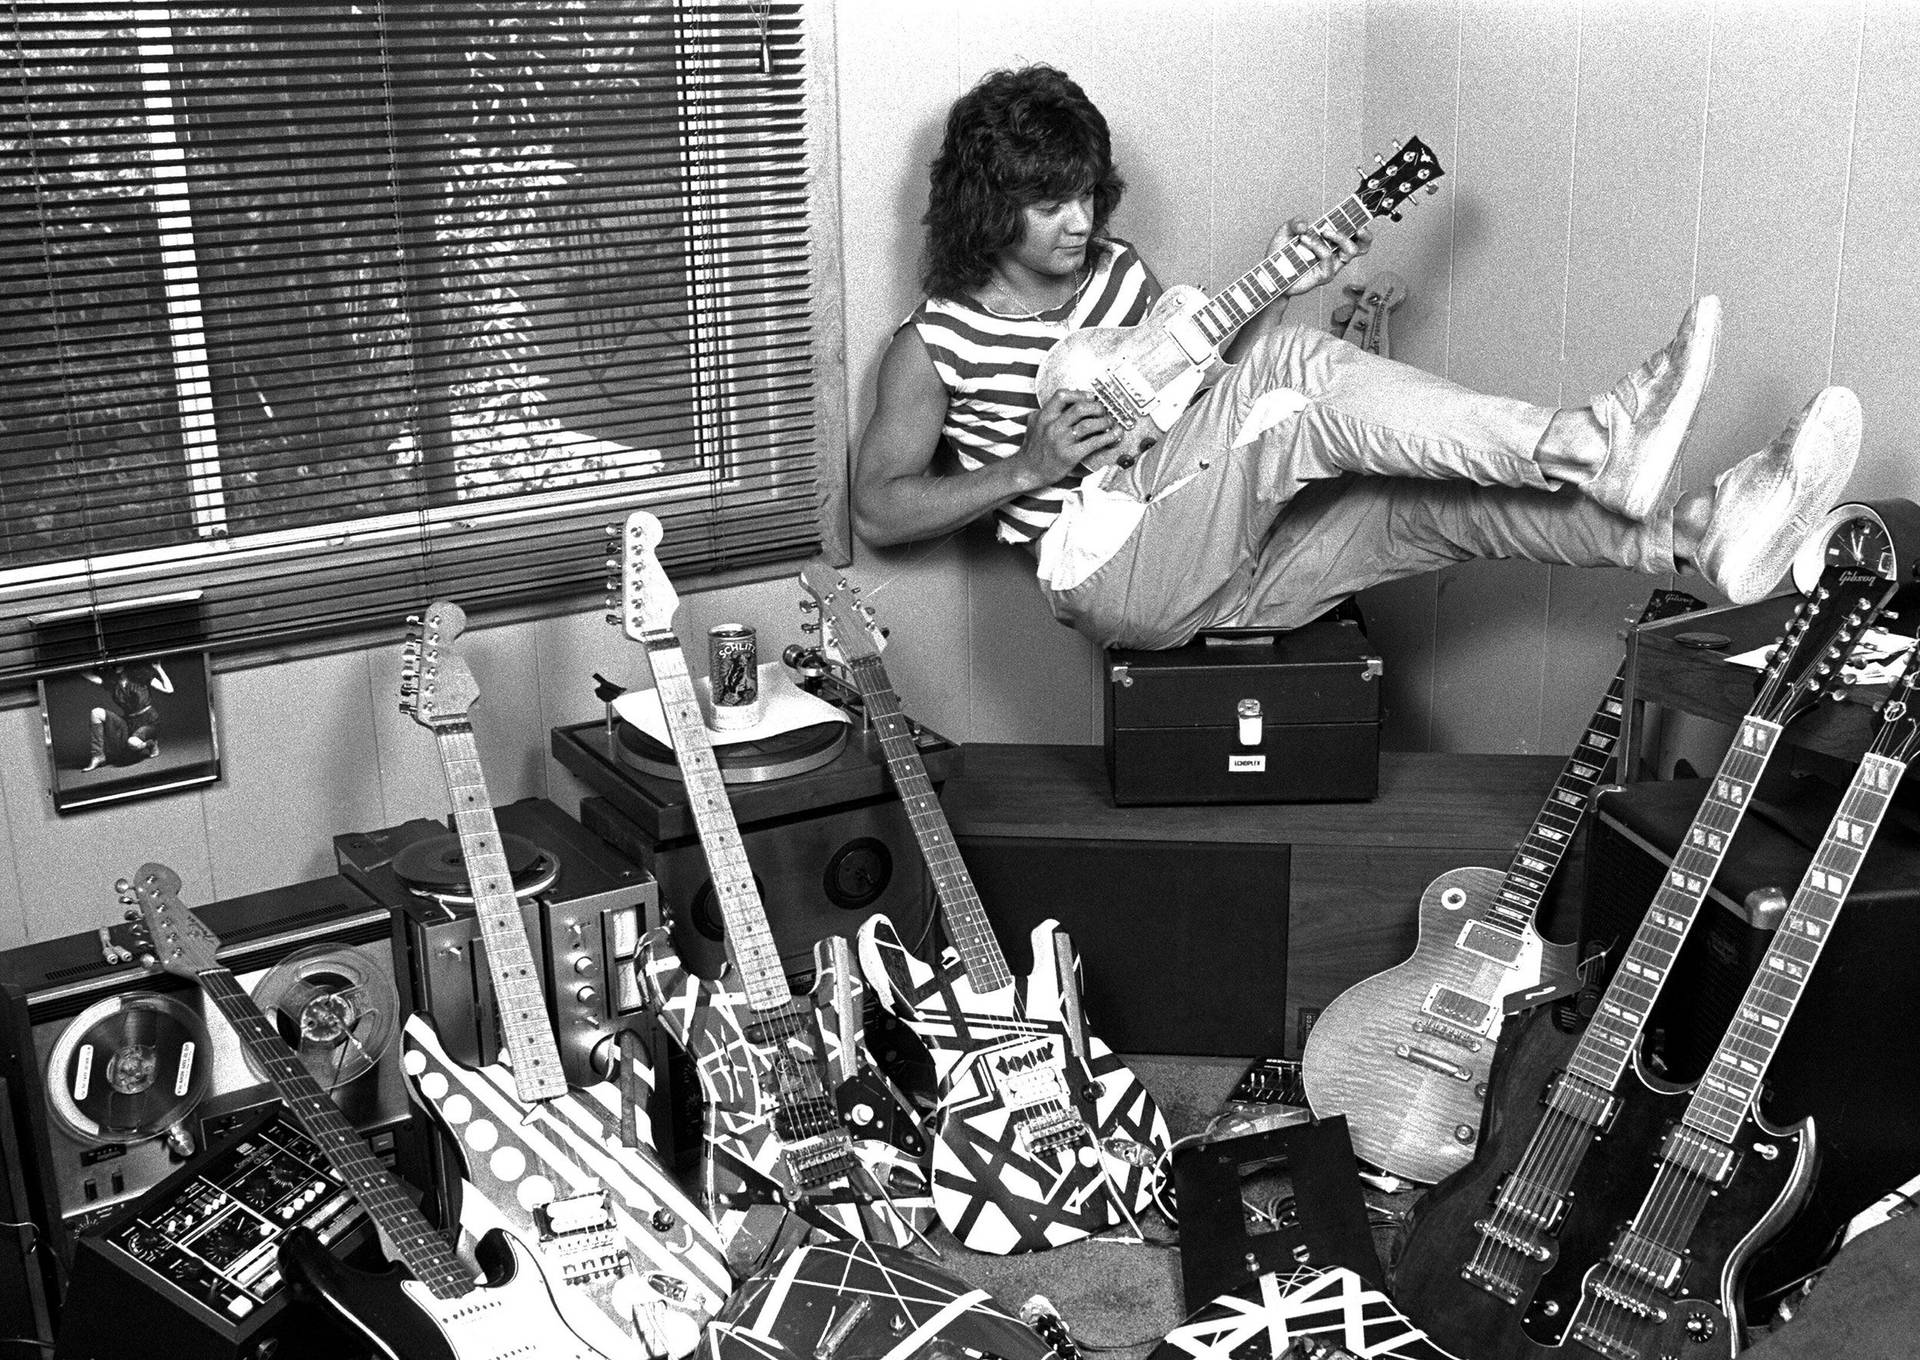 Abanda De Rock Van Halen Em Guitarras Preto E Branco. Papel de Parede